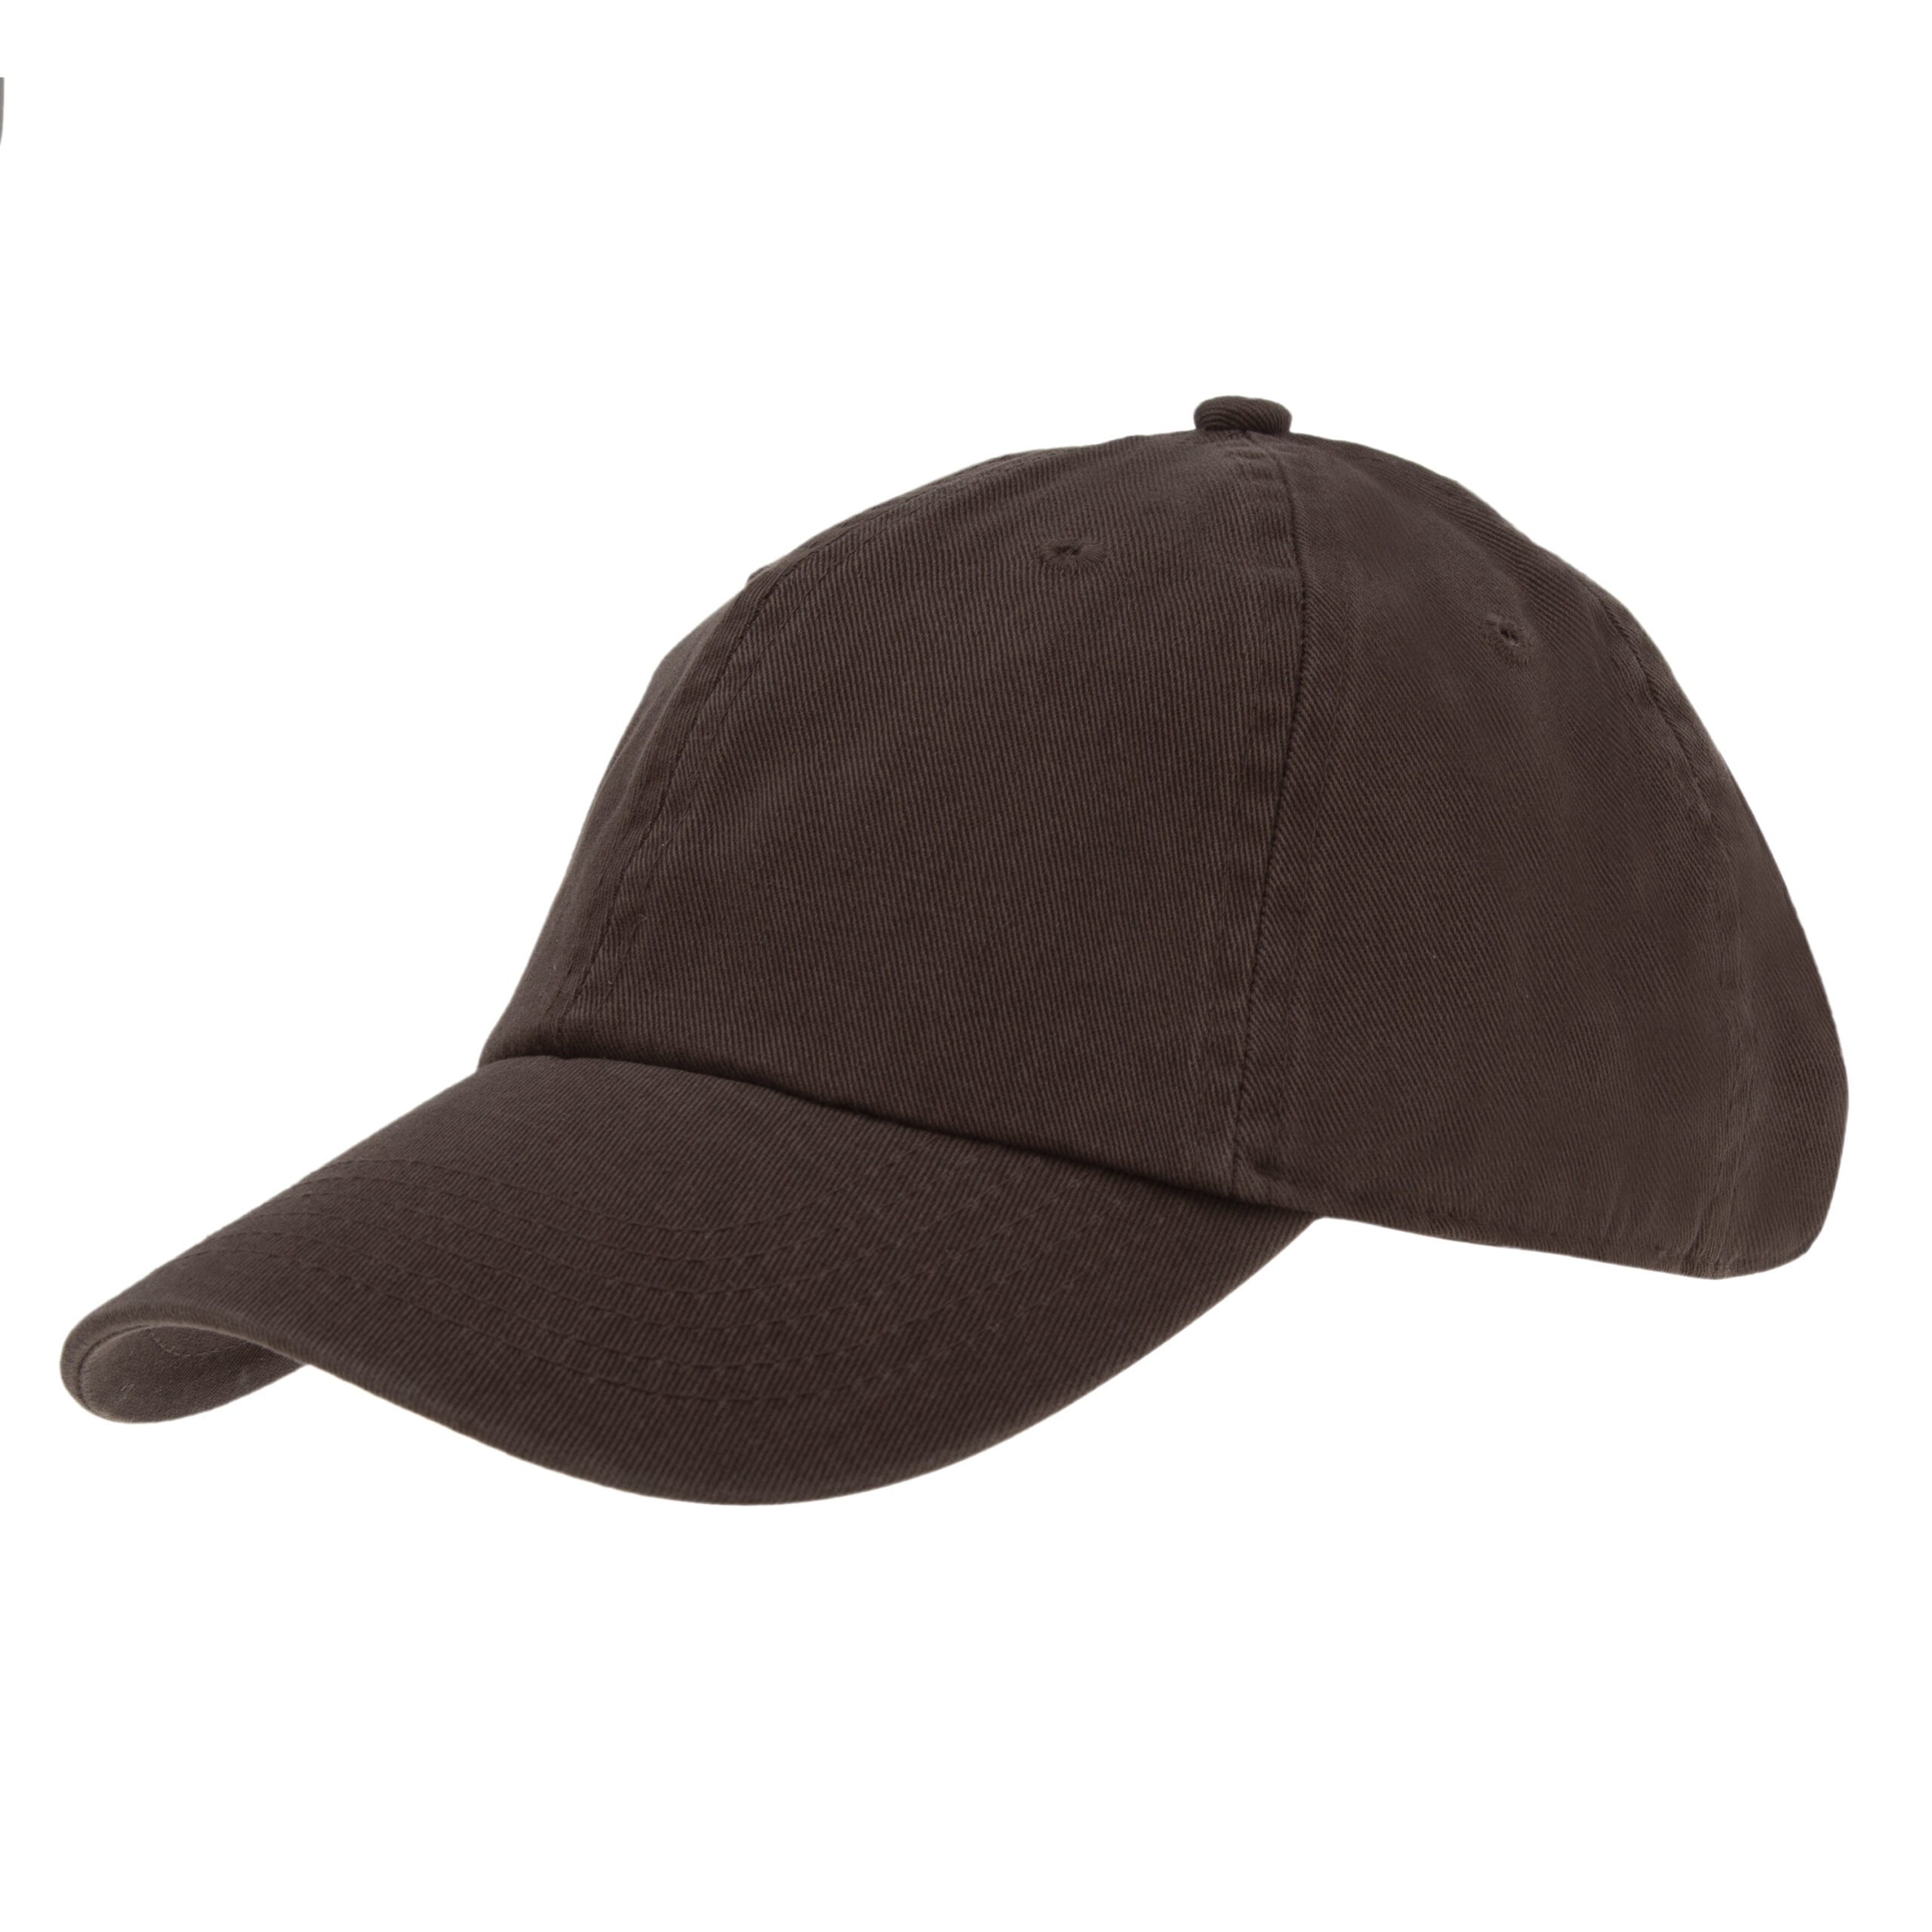 1pc Dark Brown Baseball Hat Cotton Cap - Dad Hat - Low Profile - Stone Washed